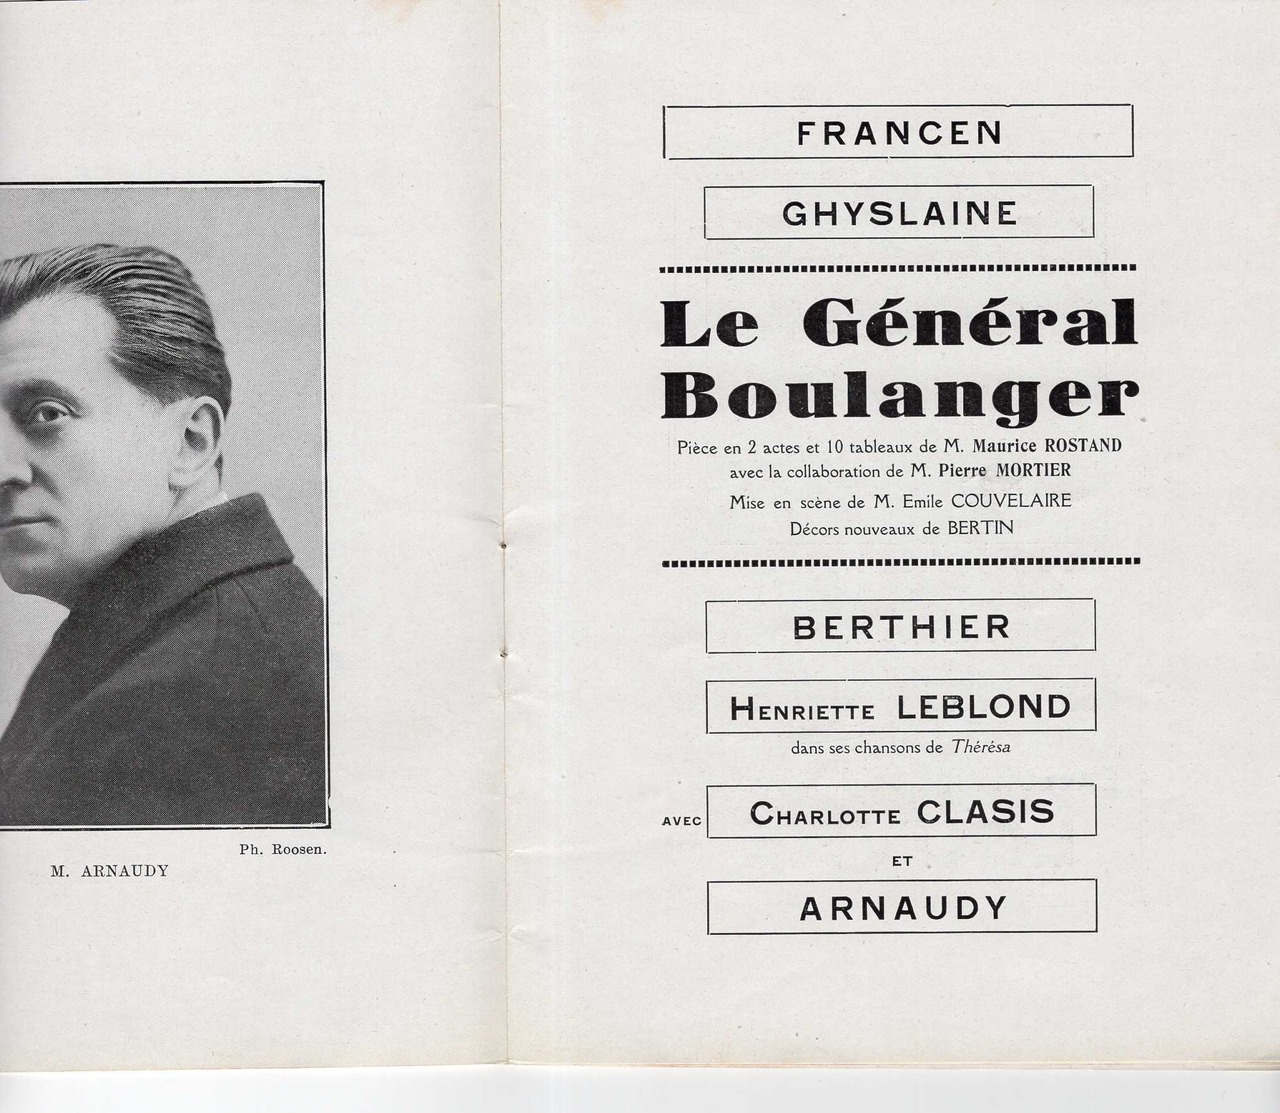 PROGRAMME THÉÂTRE PORTE ST MARTIN GÉNÉRAL BOULANGER MAURICE ROSTAND FRANCEN ARNAUDY GHYSLAINE BERTHIER LEBLOND...